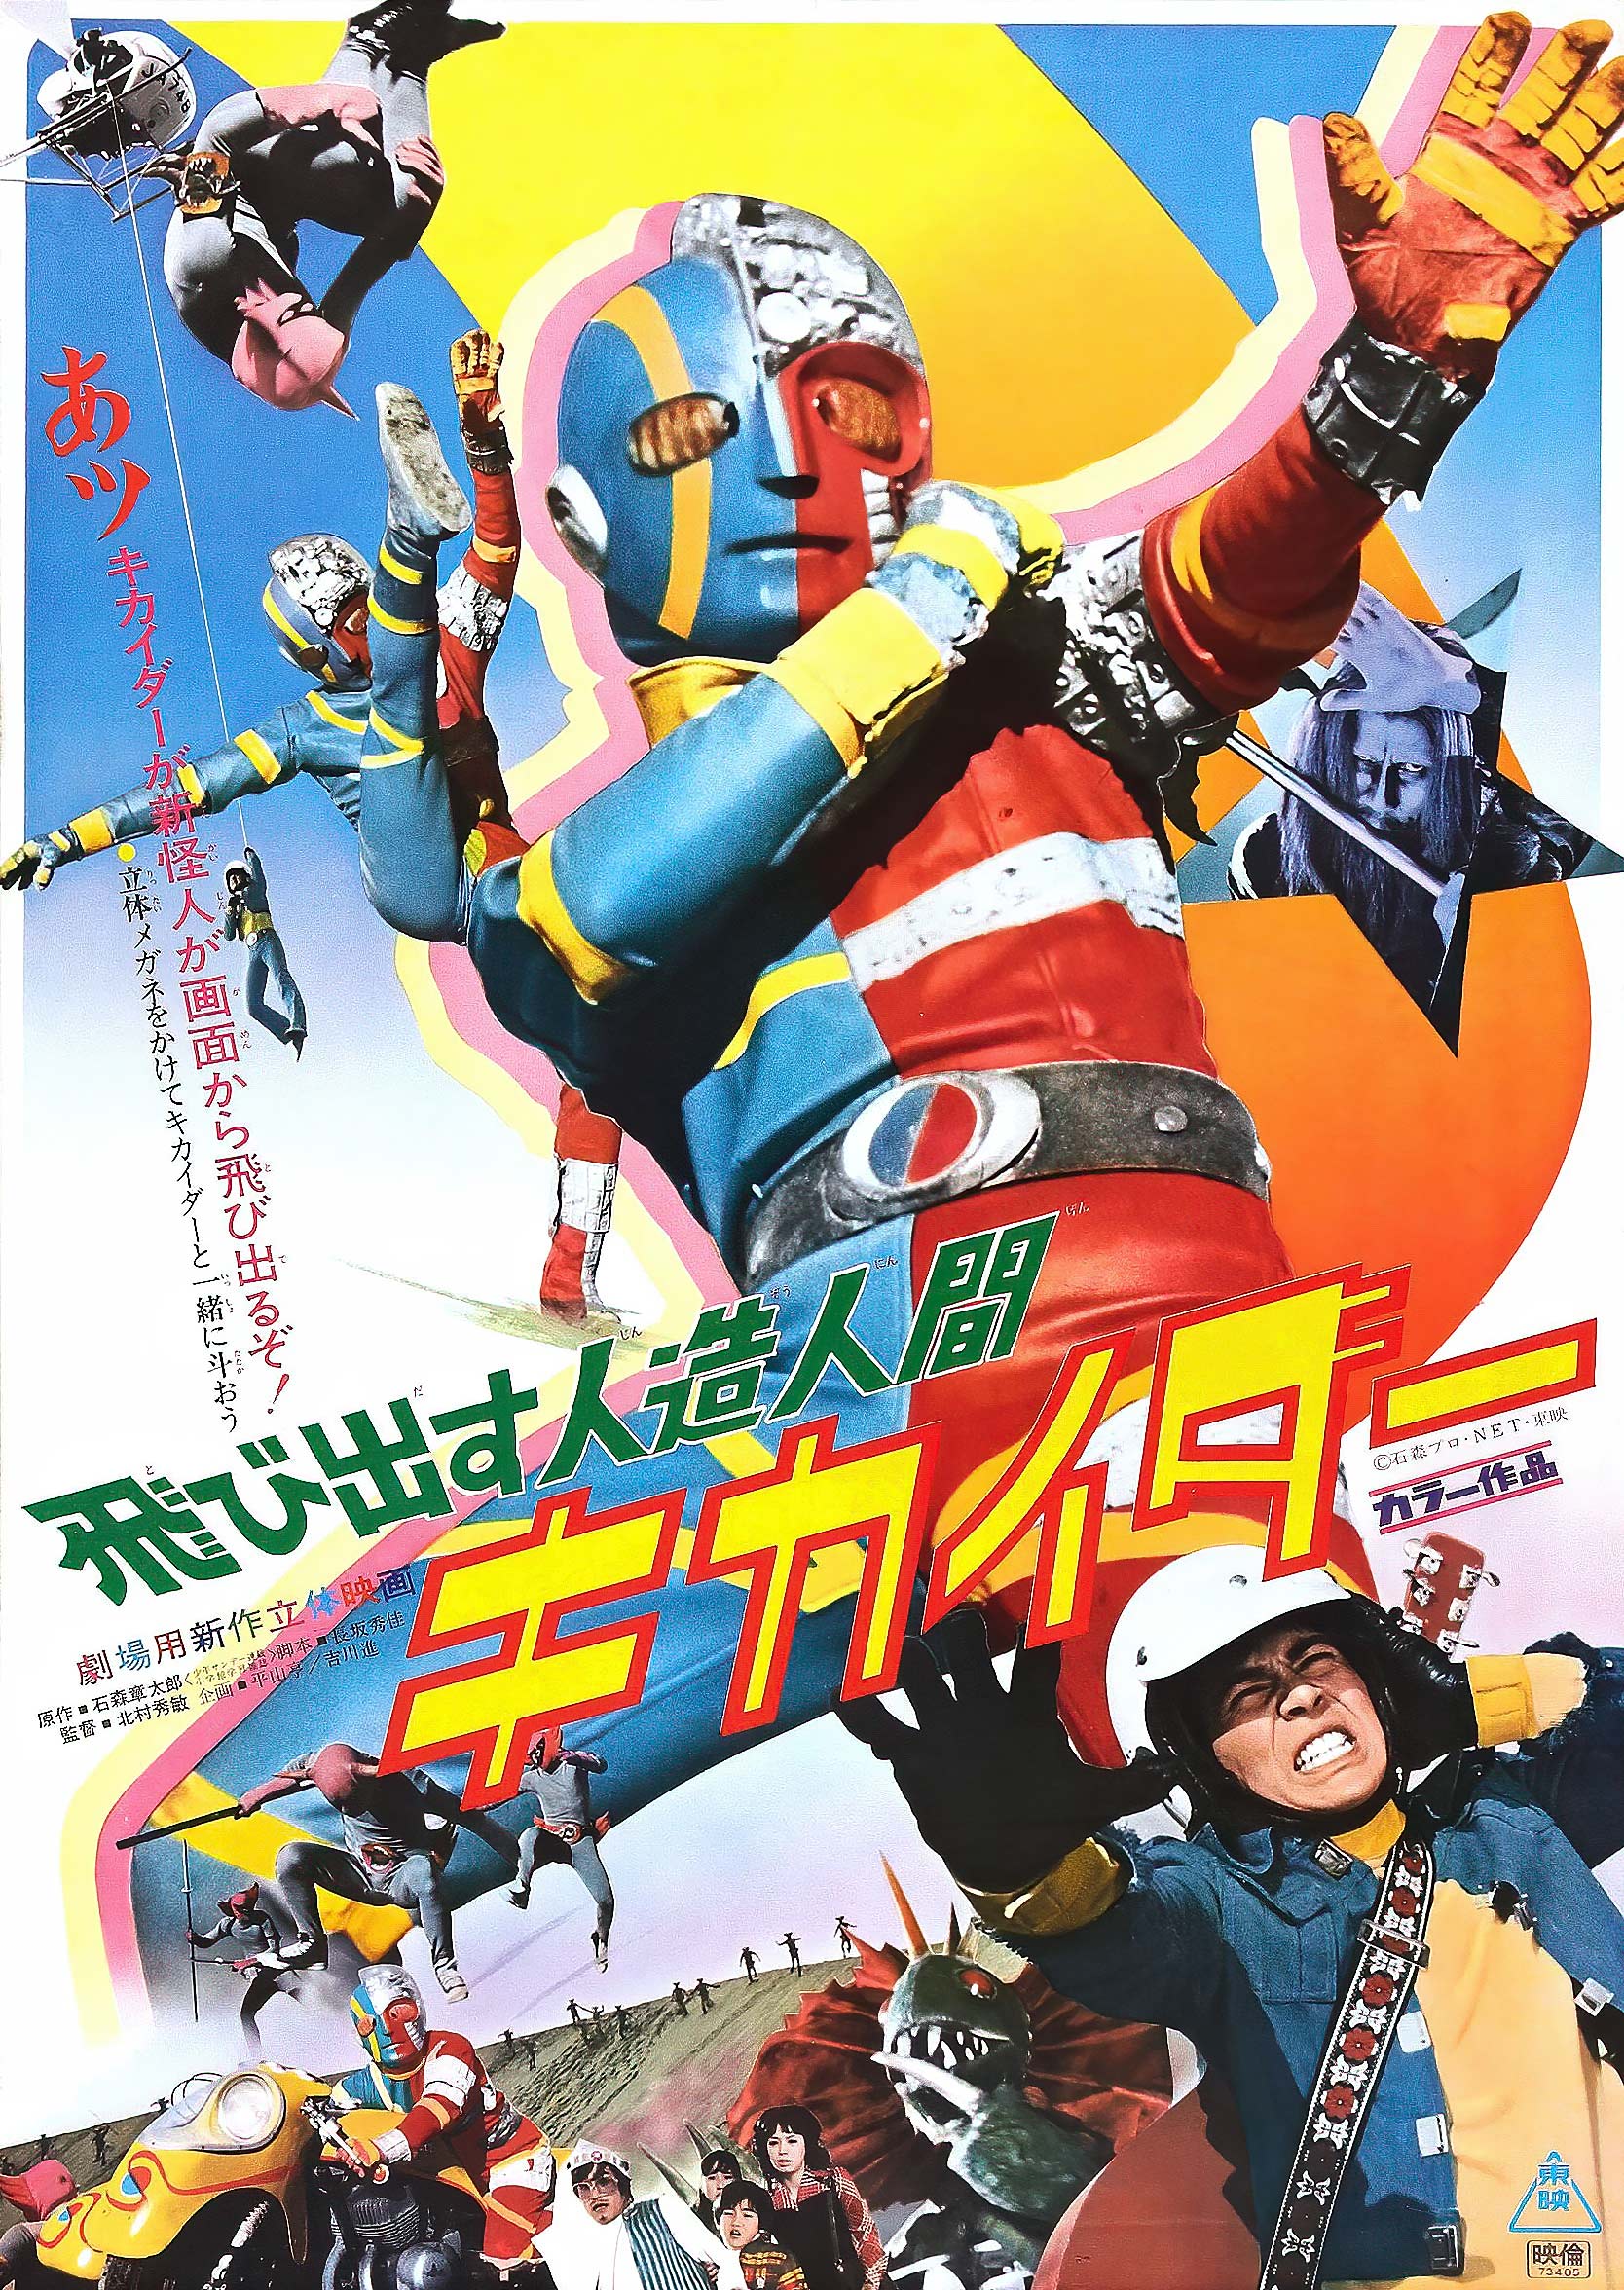 The Kikaida 3-D Movie